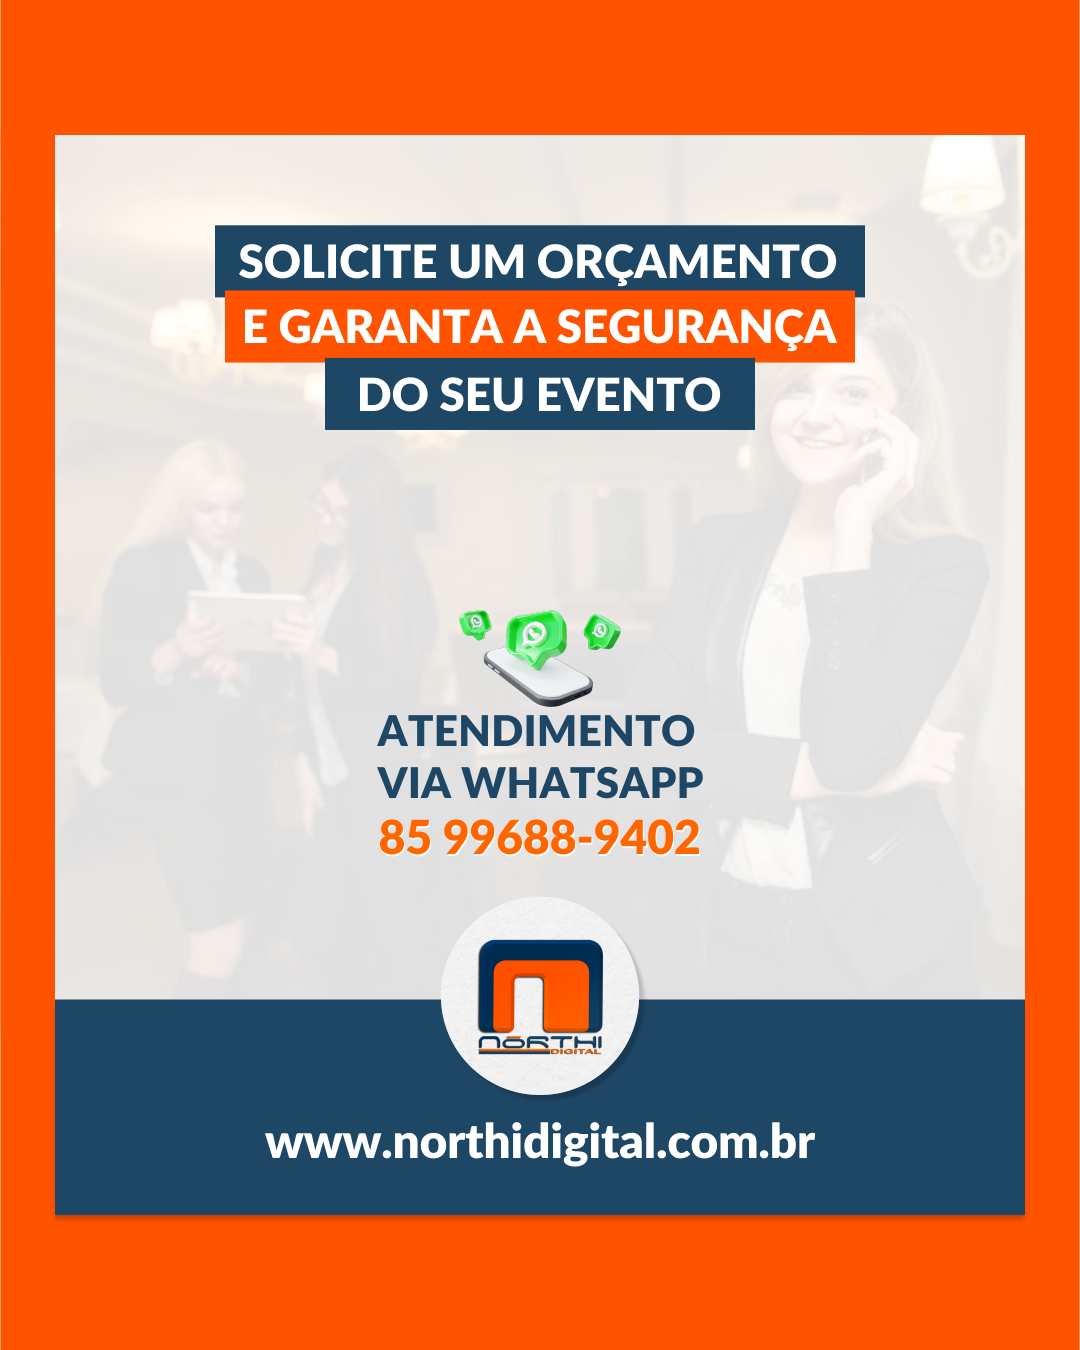 www.northidigital.com.br